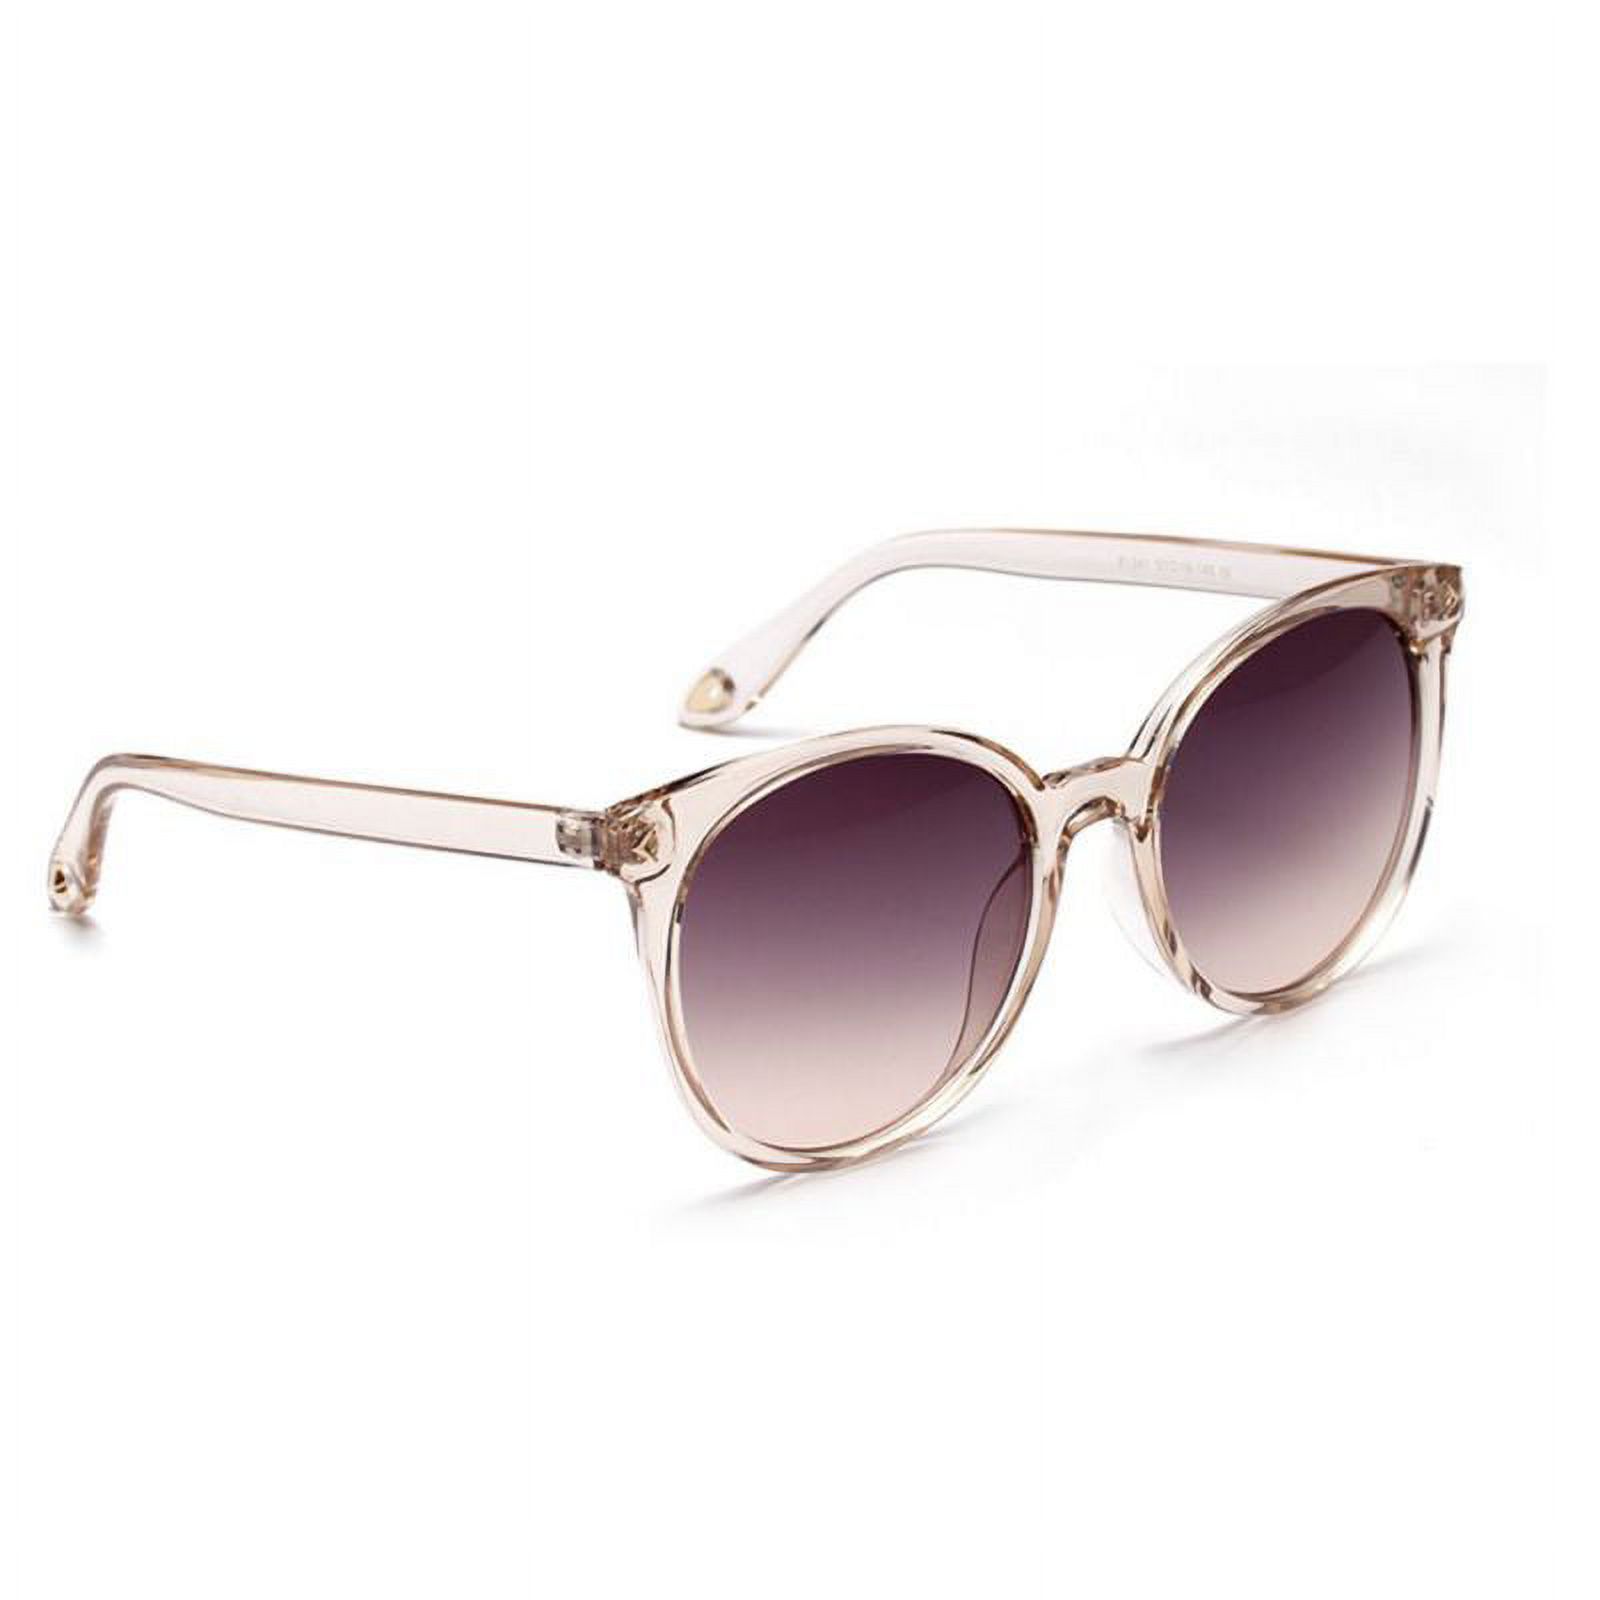 Retro Round Transparent Frame Sunglasses Women Men Brand Designer Sun Glasses for Women Alloy Mirror,Coffee - image 2 of 3